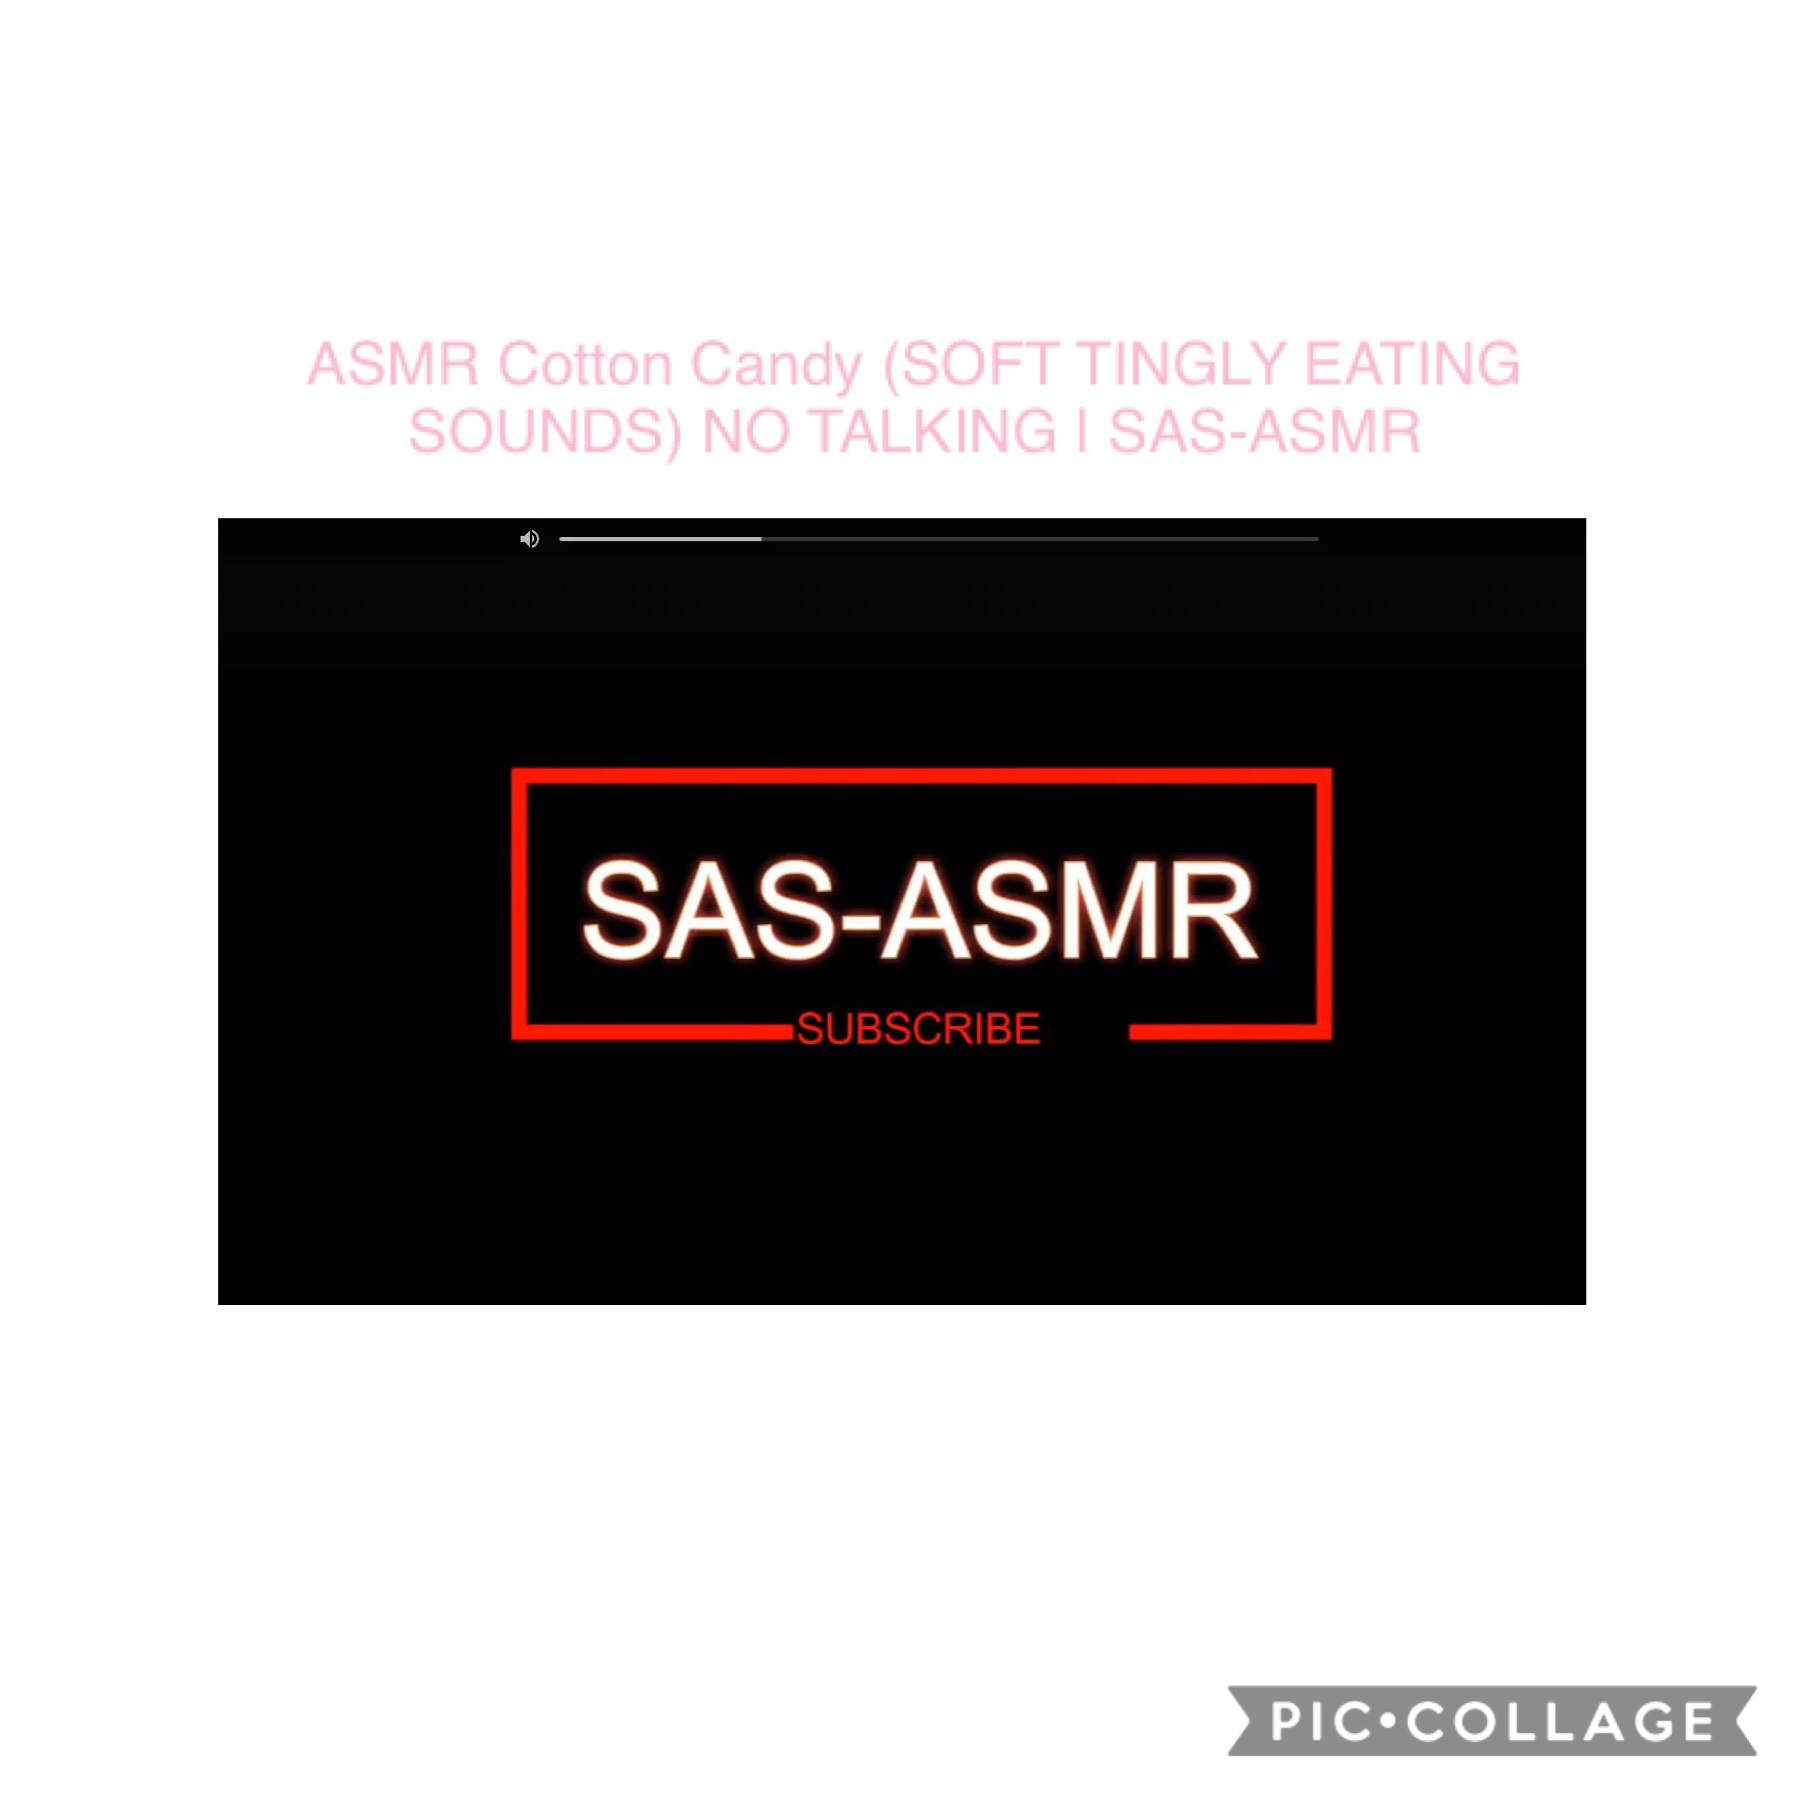 ASMR Cotton Candy (SOFT TINGLY EATING SOUNDS) NO TALKING | SAS-ASMR